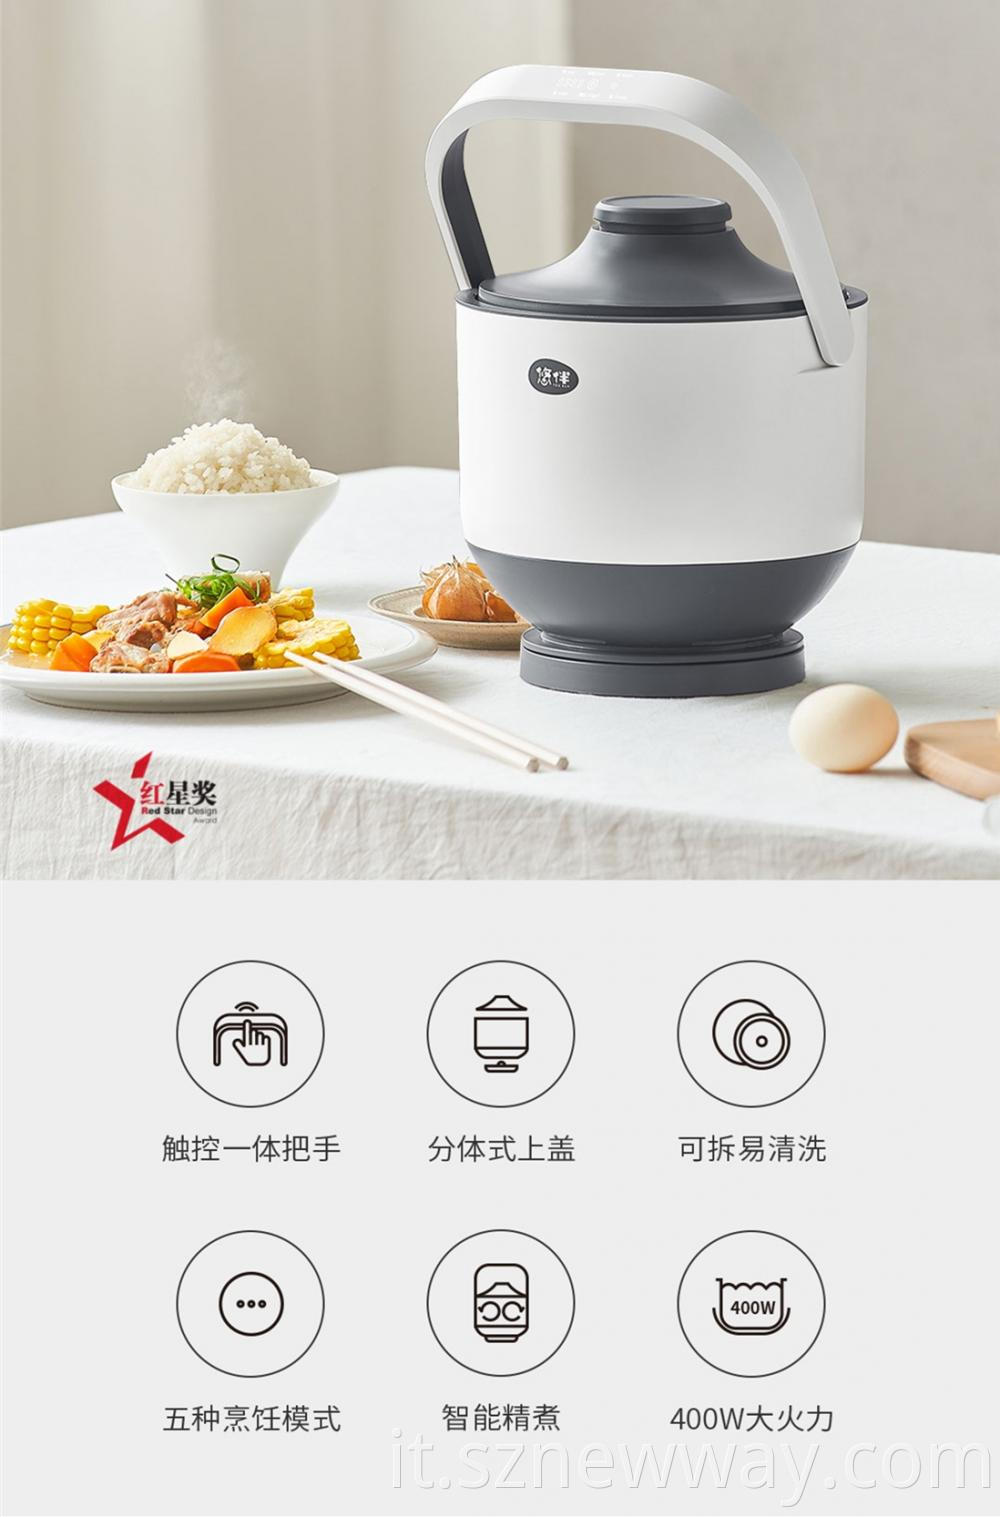 Youban Rice Cooker